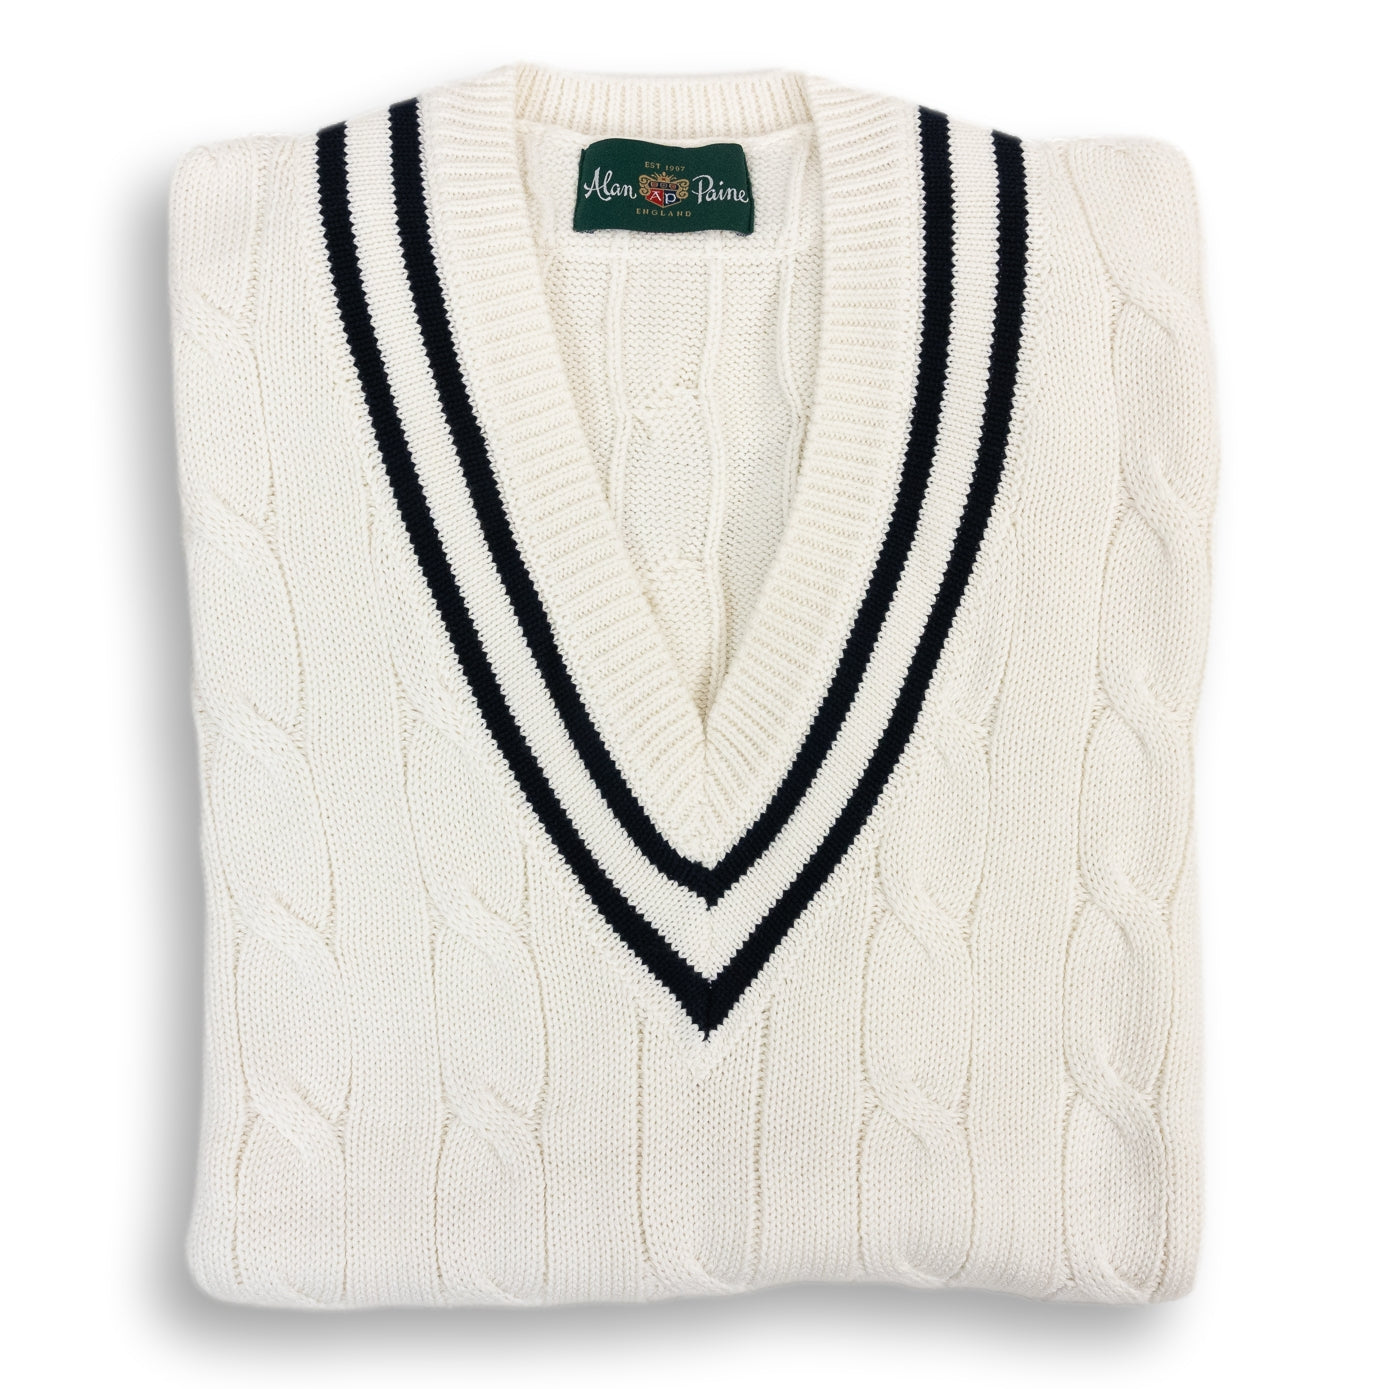 Chadbury Cricket V-Neck Cable Knit Sweater Vest